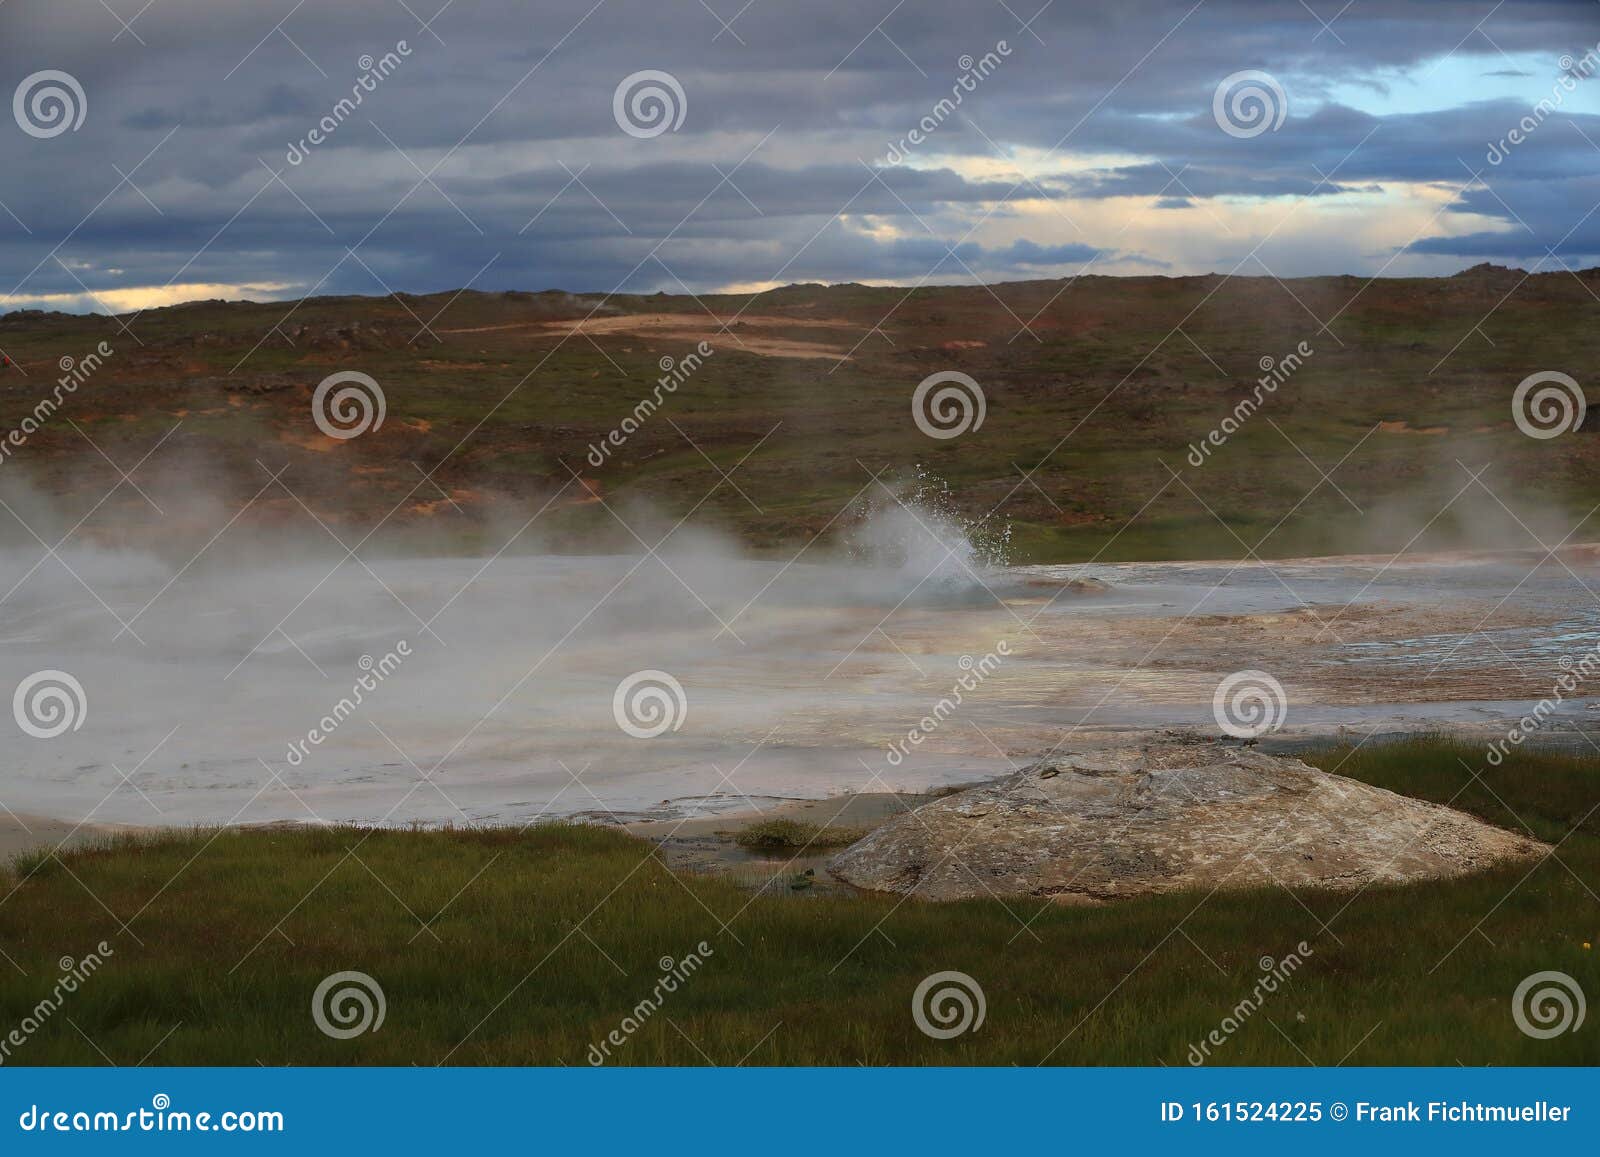 Iceland Landscape Hveravellir Geothermal Area Area Of Fumaroles And